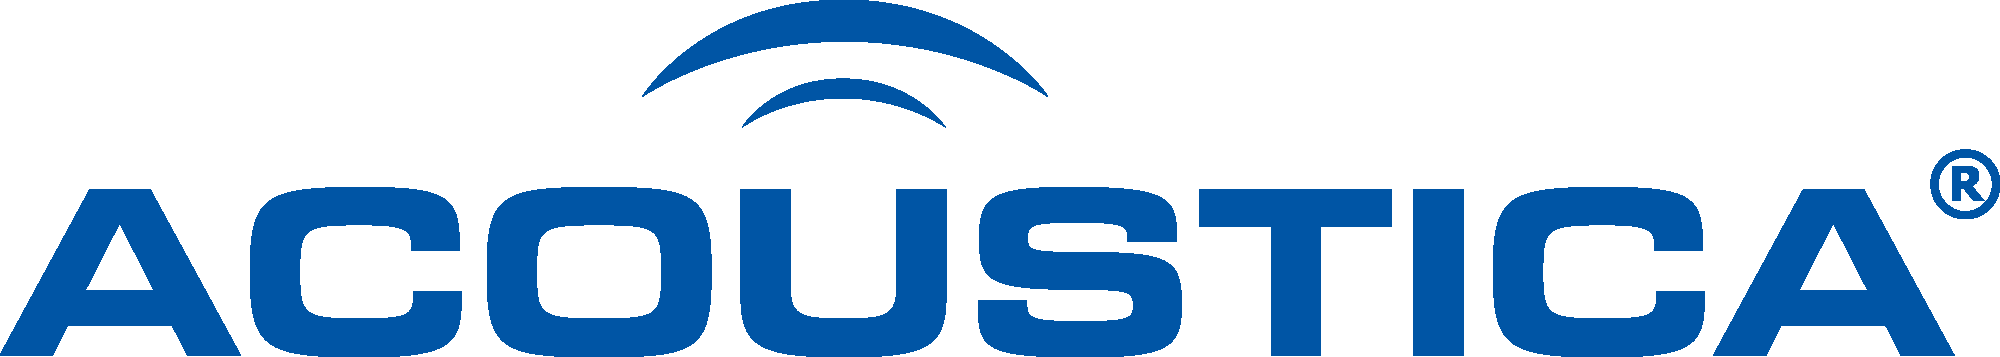 Acoustica Logo - Blue